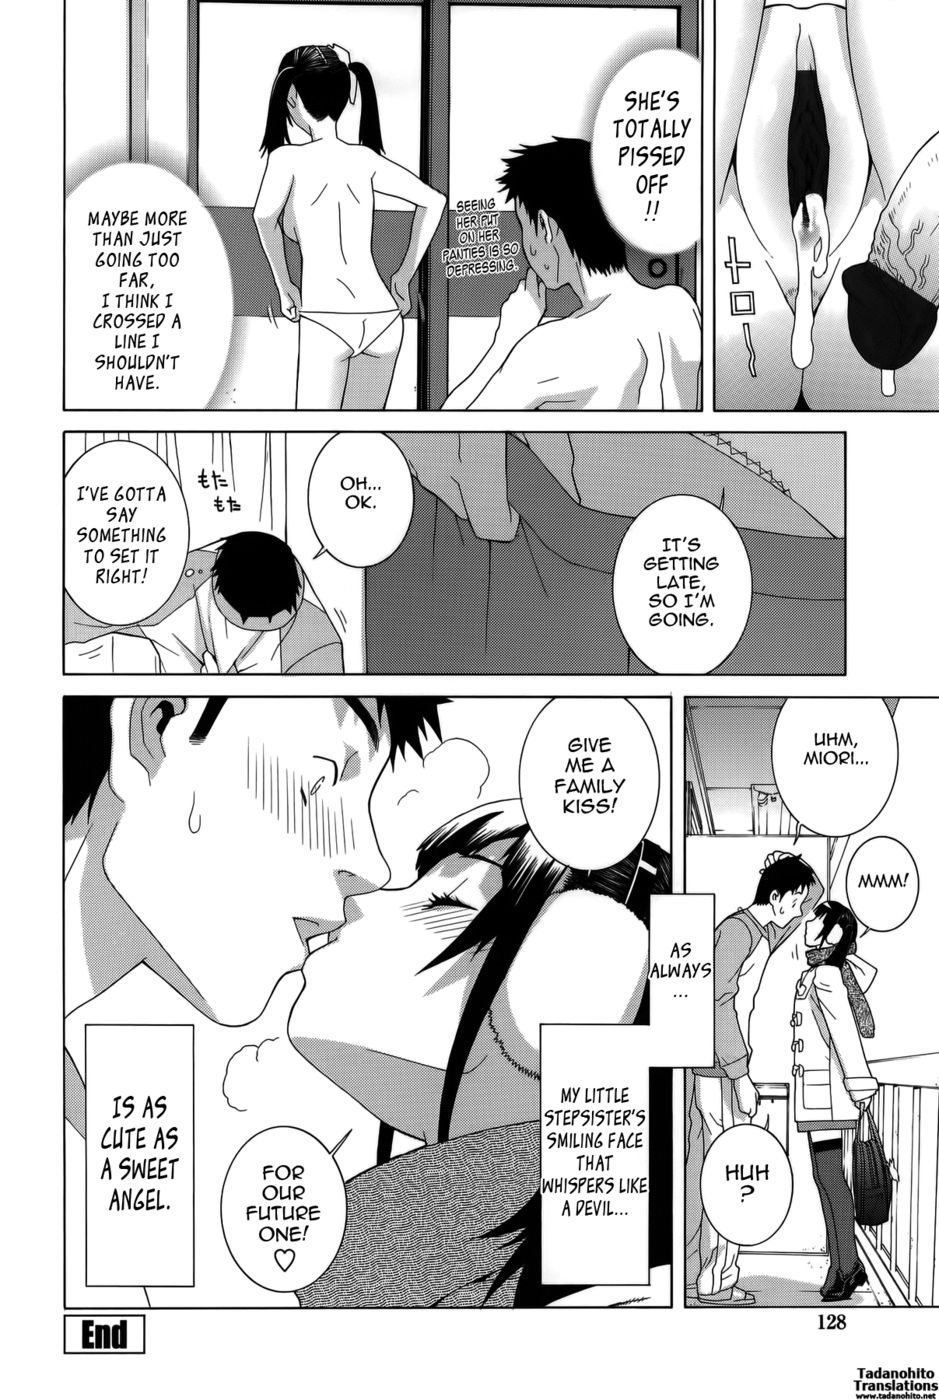 Hentai Manga Comic-Little Stepsister Band-aid-Read-16